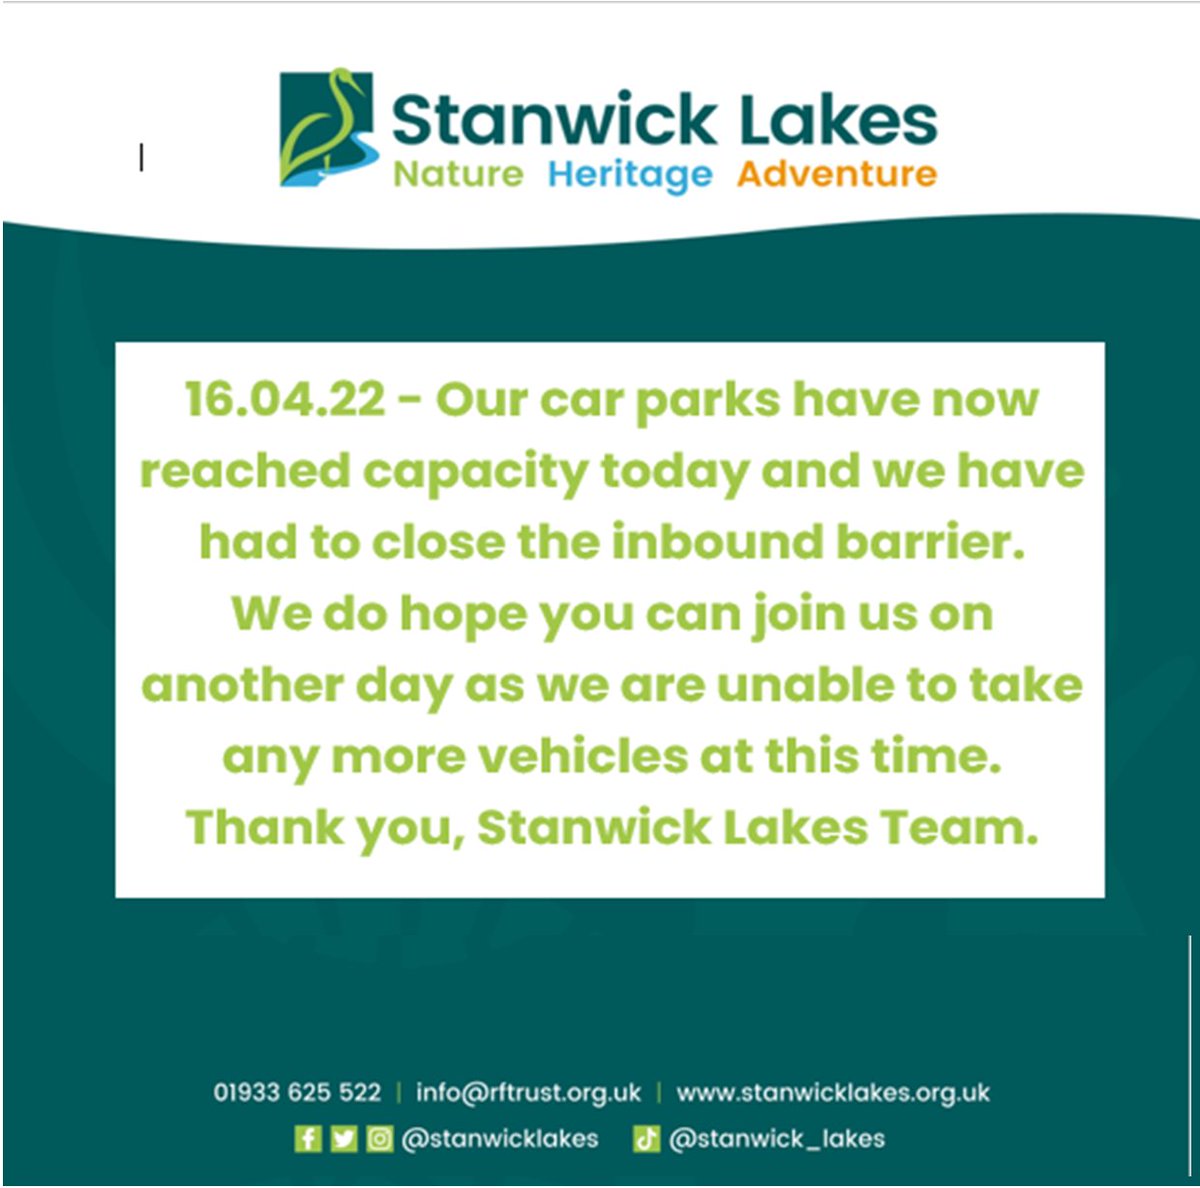 Thank you, Stanwick Lakes Team.